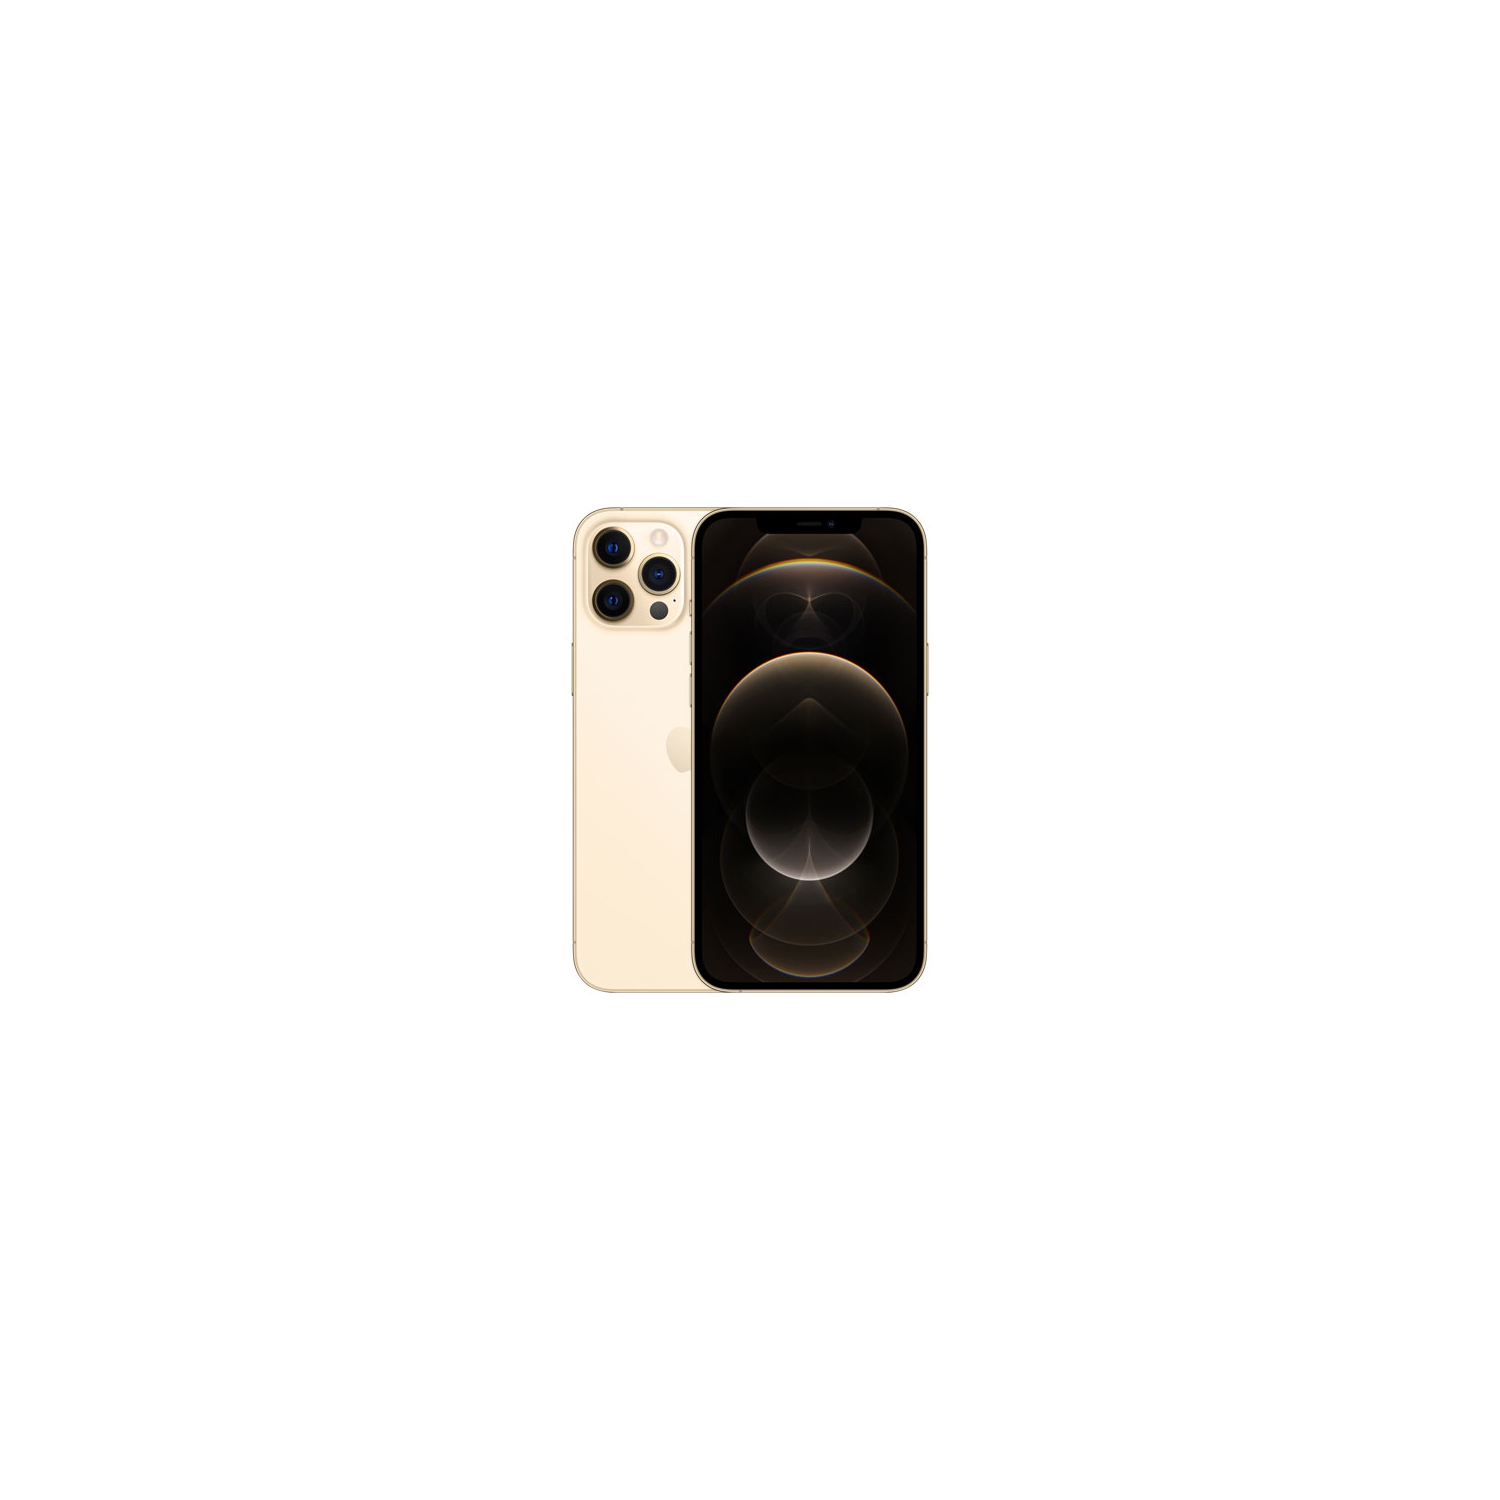 Refurbished (Good) - Apple iPhone 12 Pro Max 256GB Smartphone - Gold - Unlocked